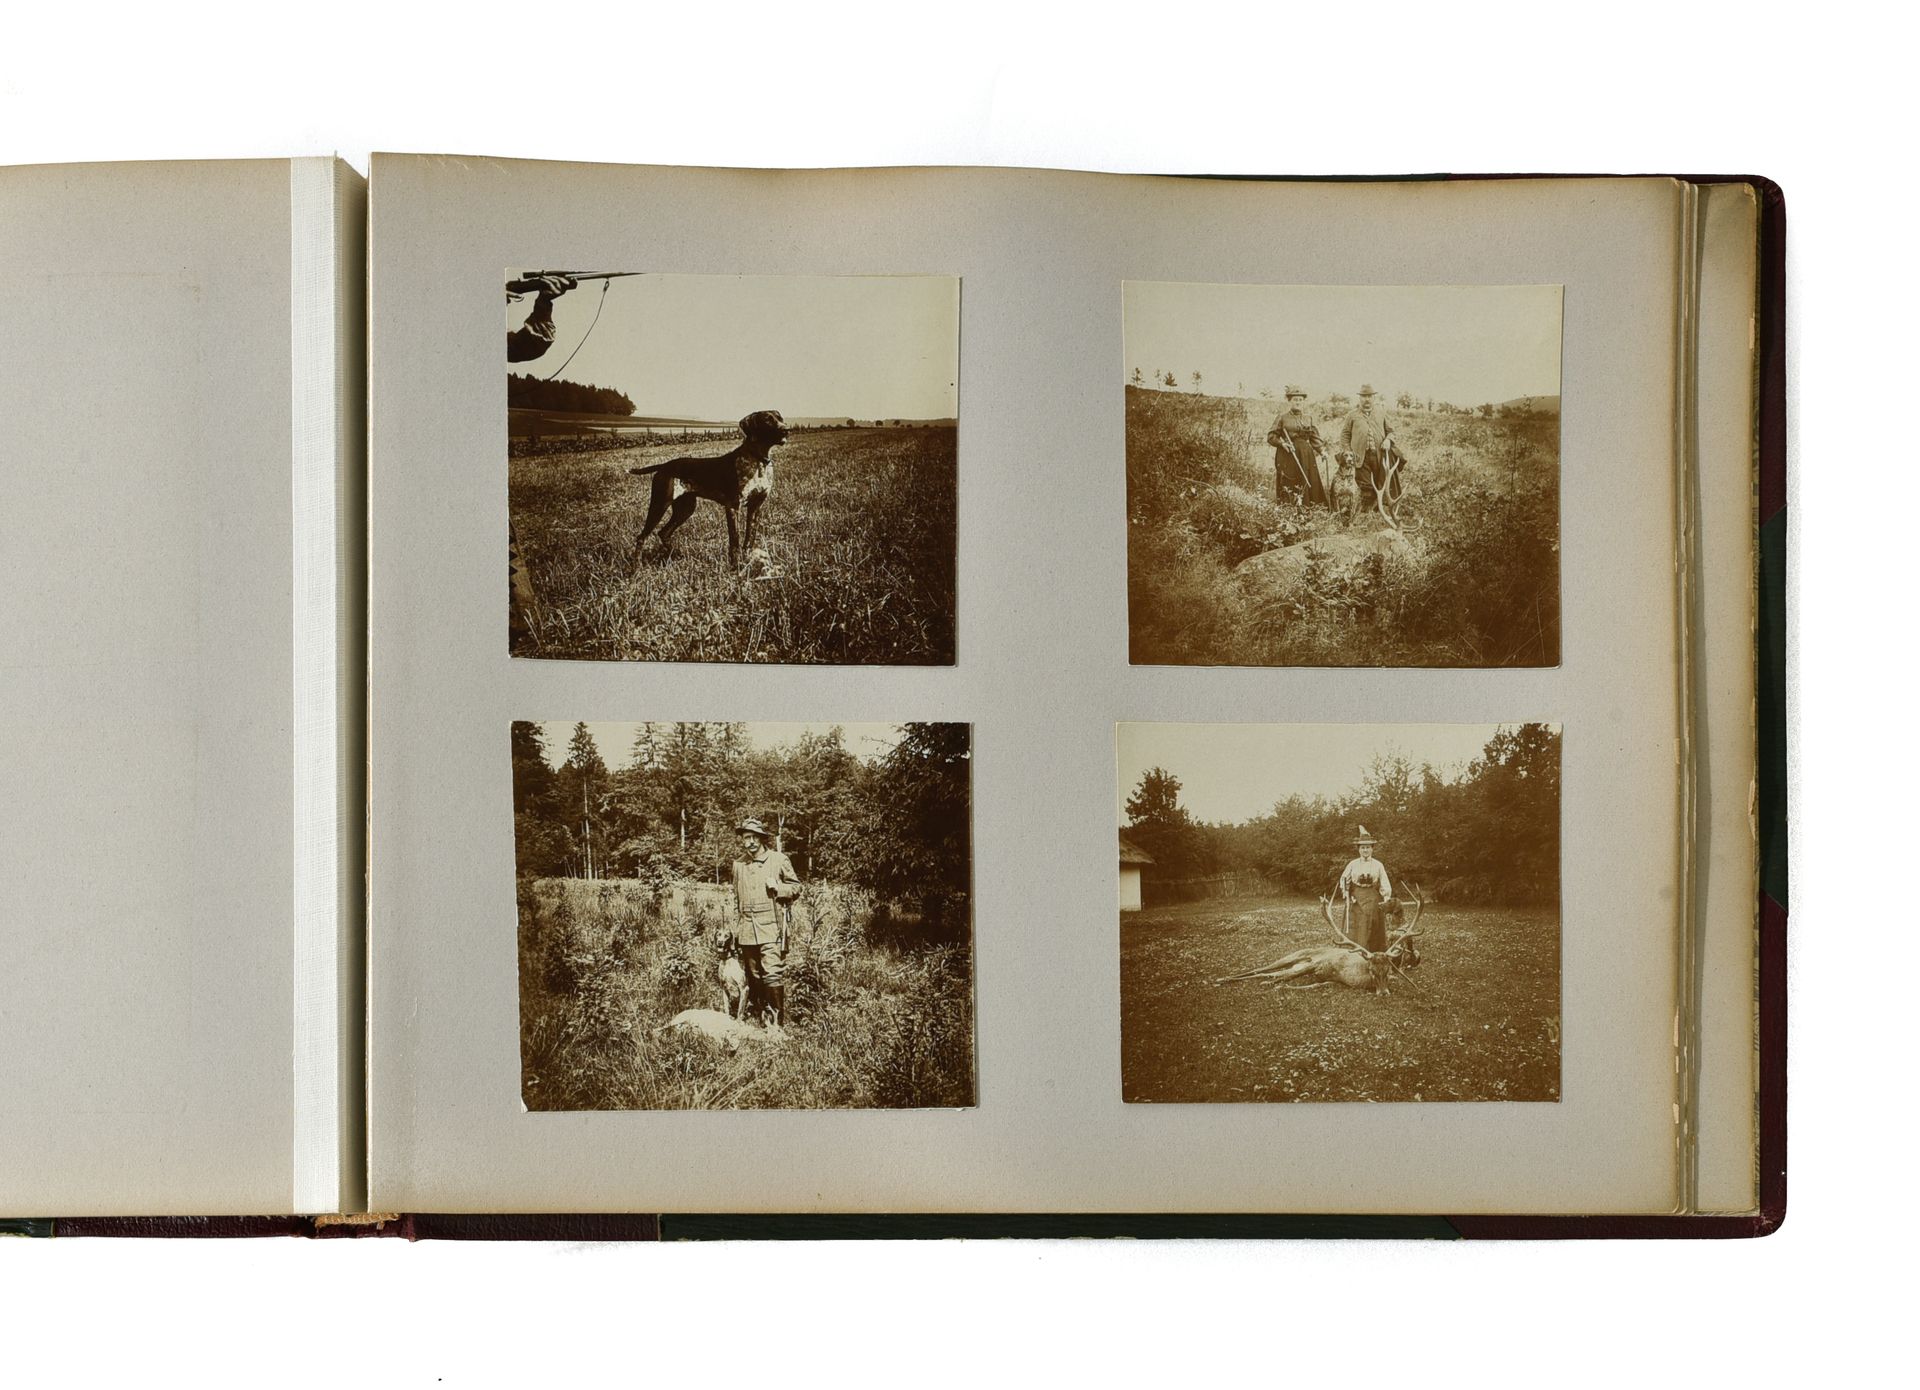 Album de photographies de chiens BELGIO, CIRCA 1900

Album di fotografie di cani&hellip;